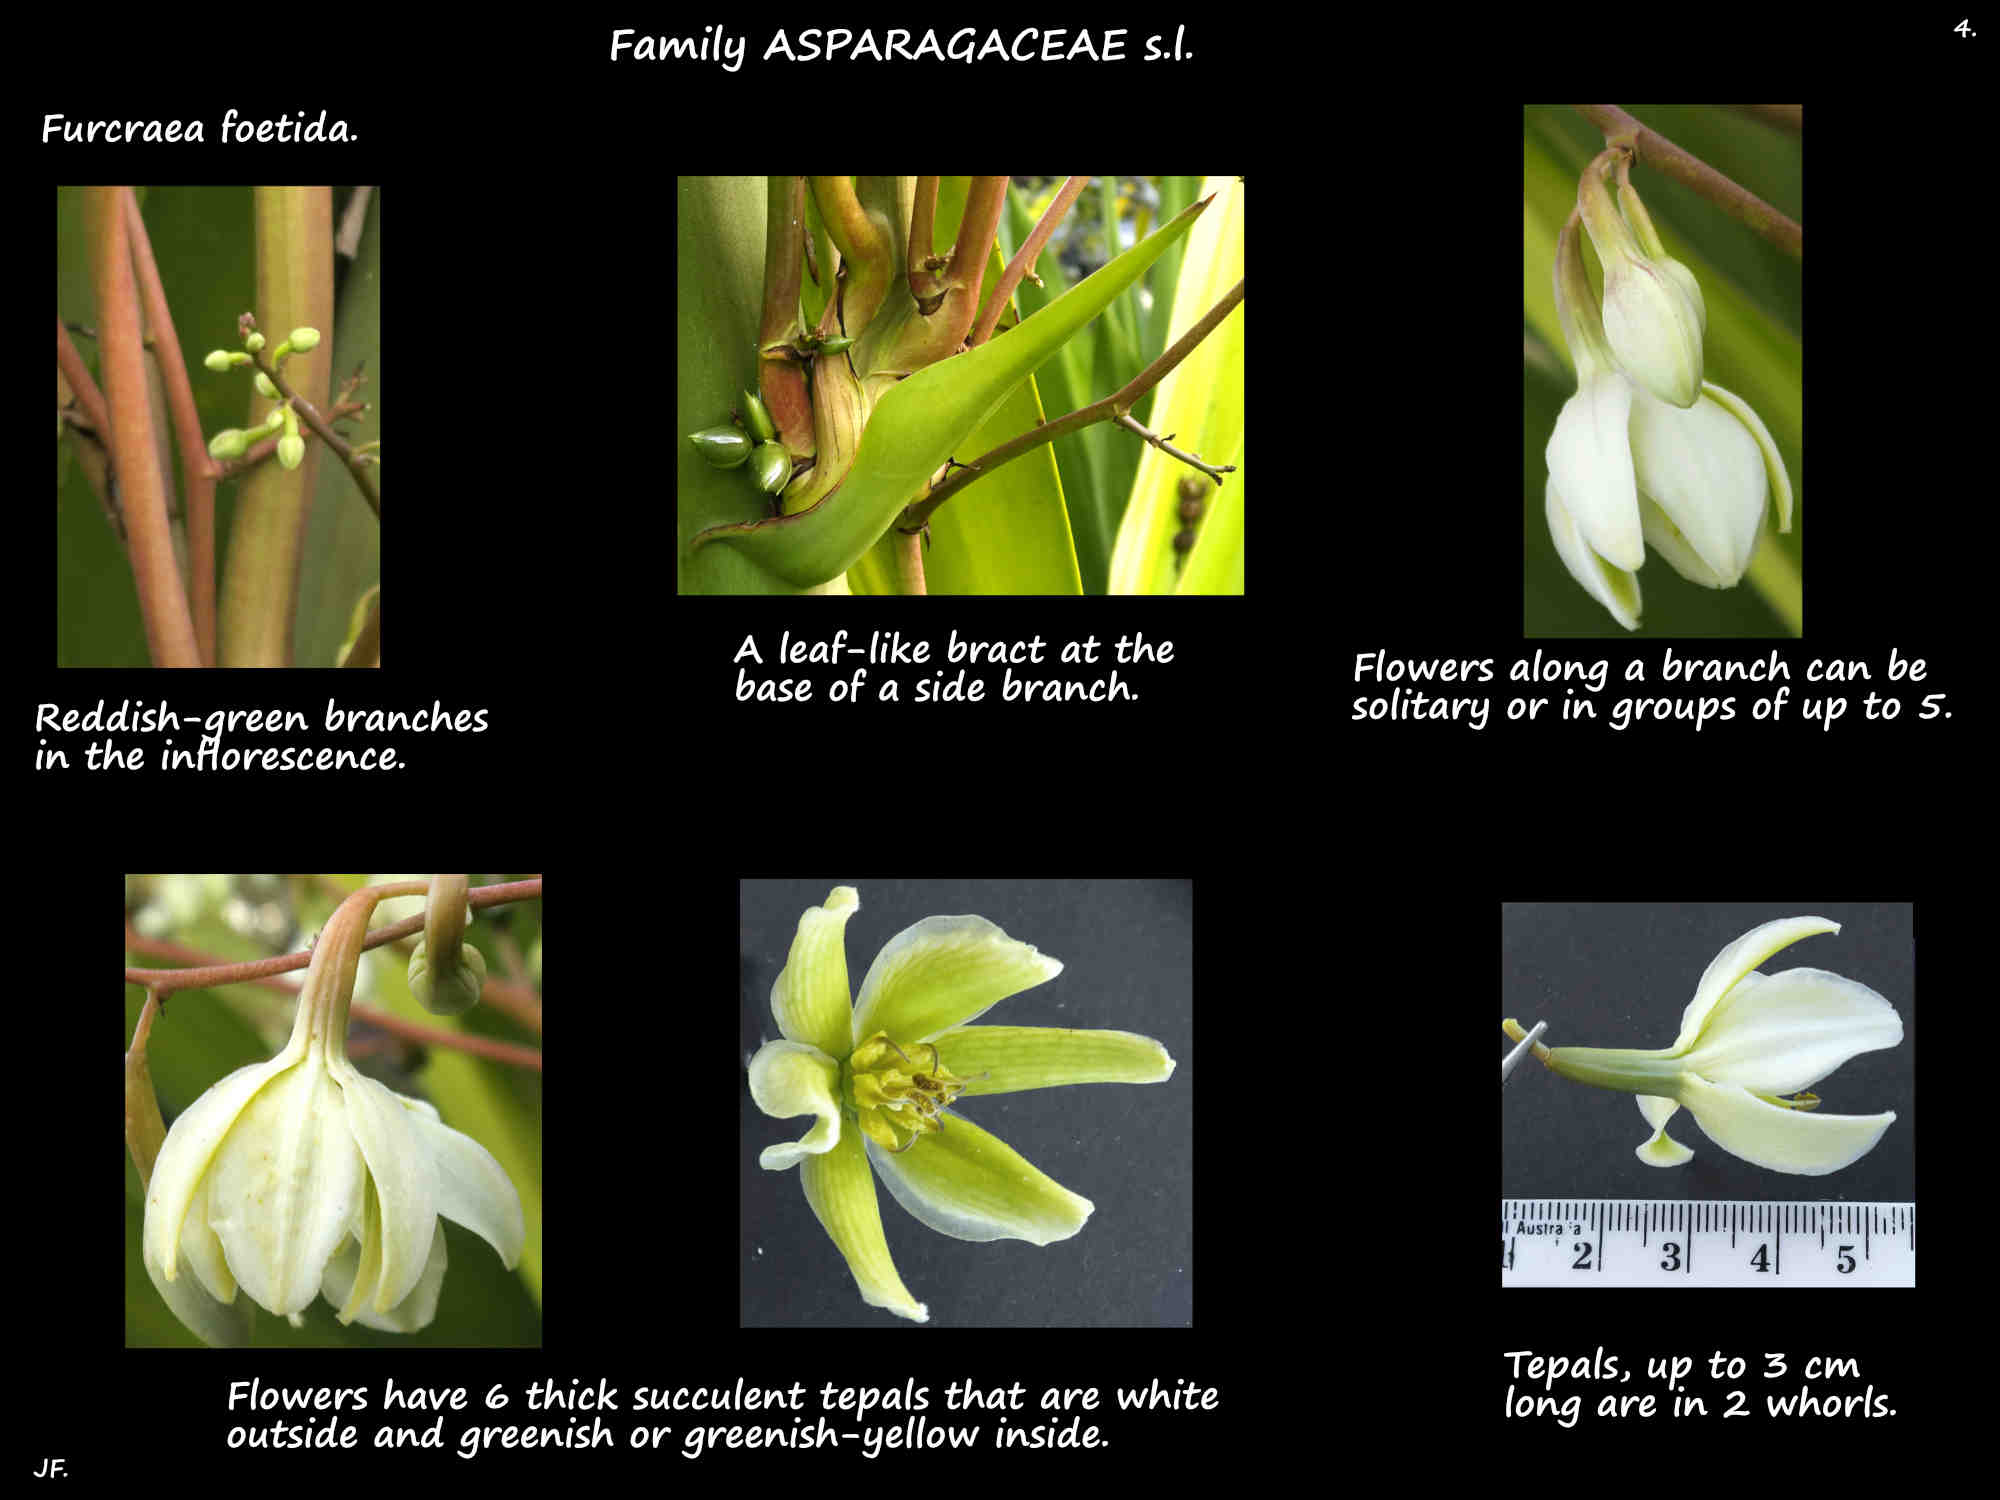 4 The tepals of Furcraea foetida flowers